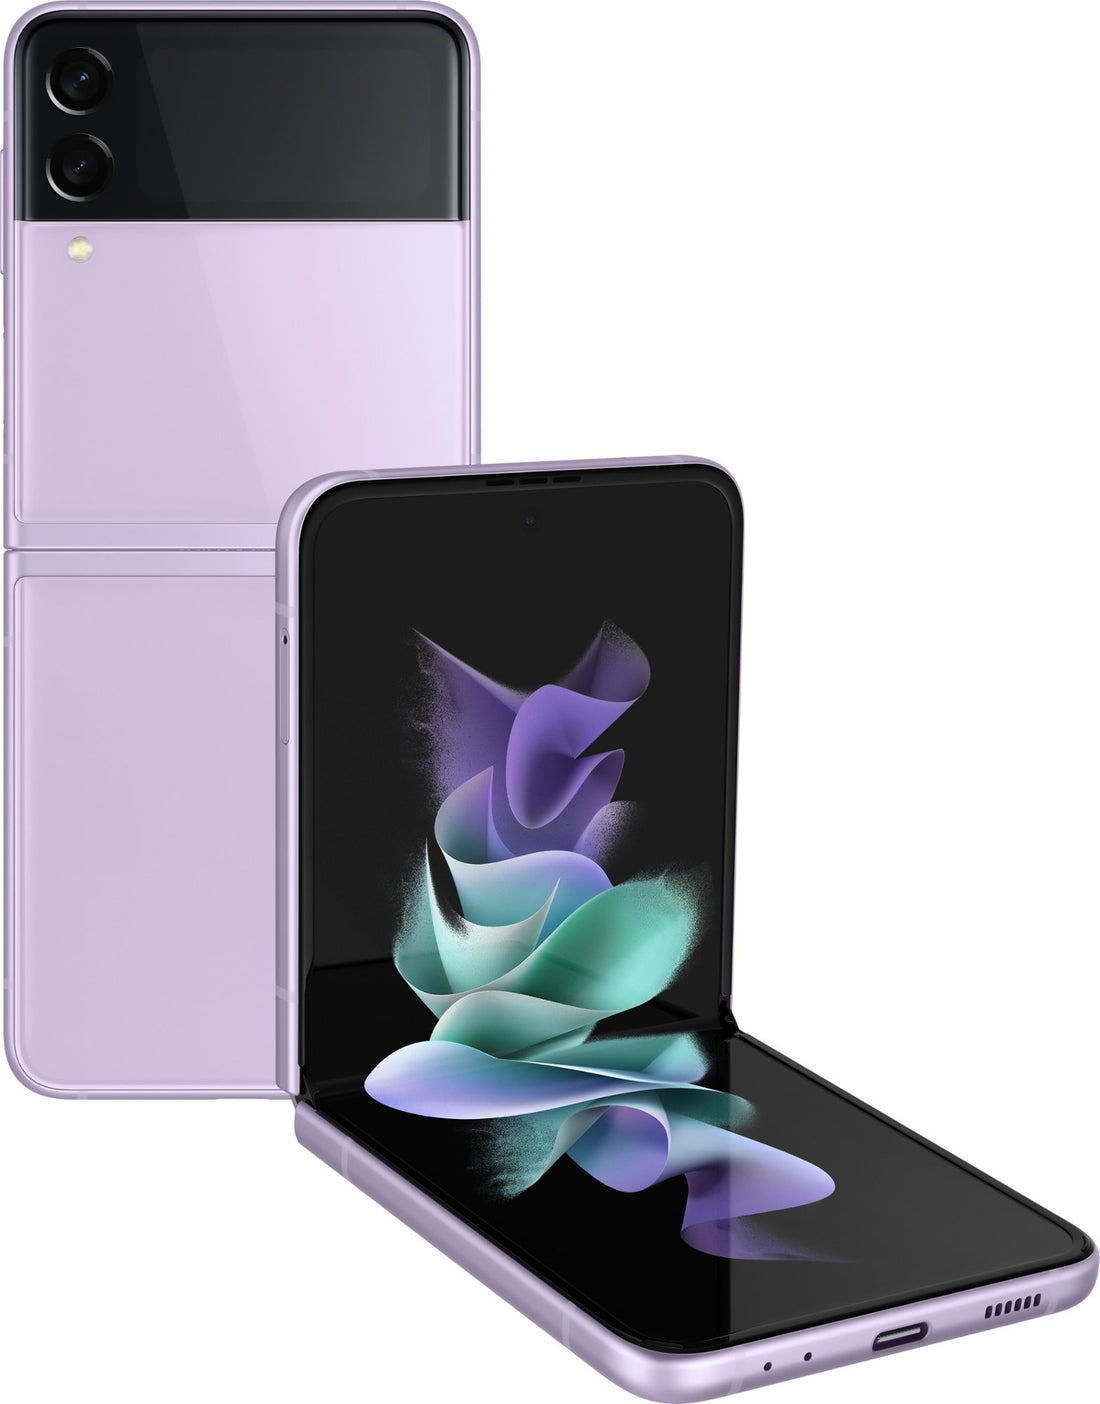 Samsung Galaxy Z Flip3 128GB (Unlocked) - Lavender (Used)